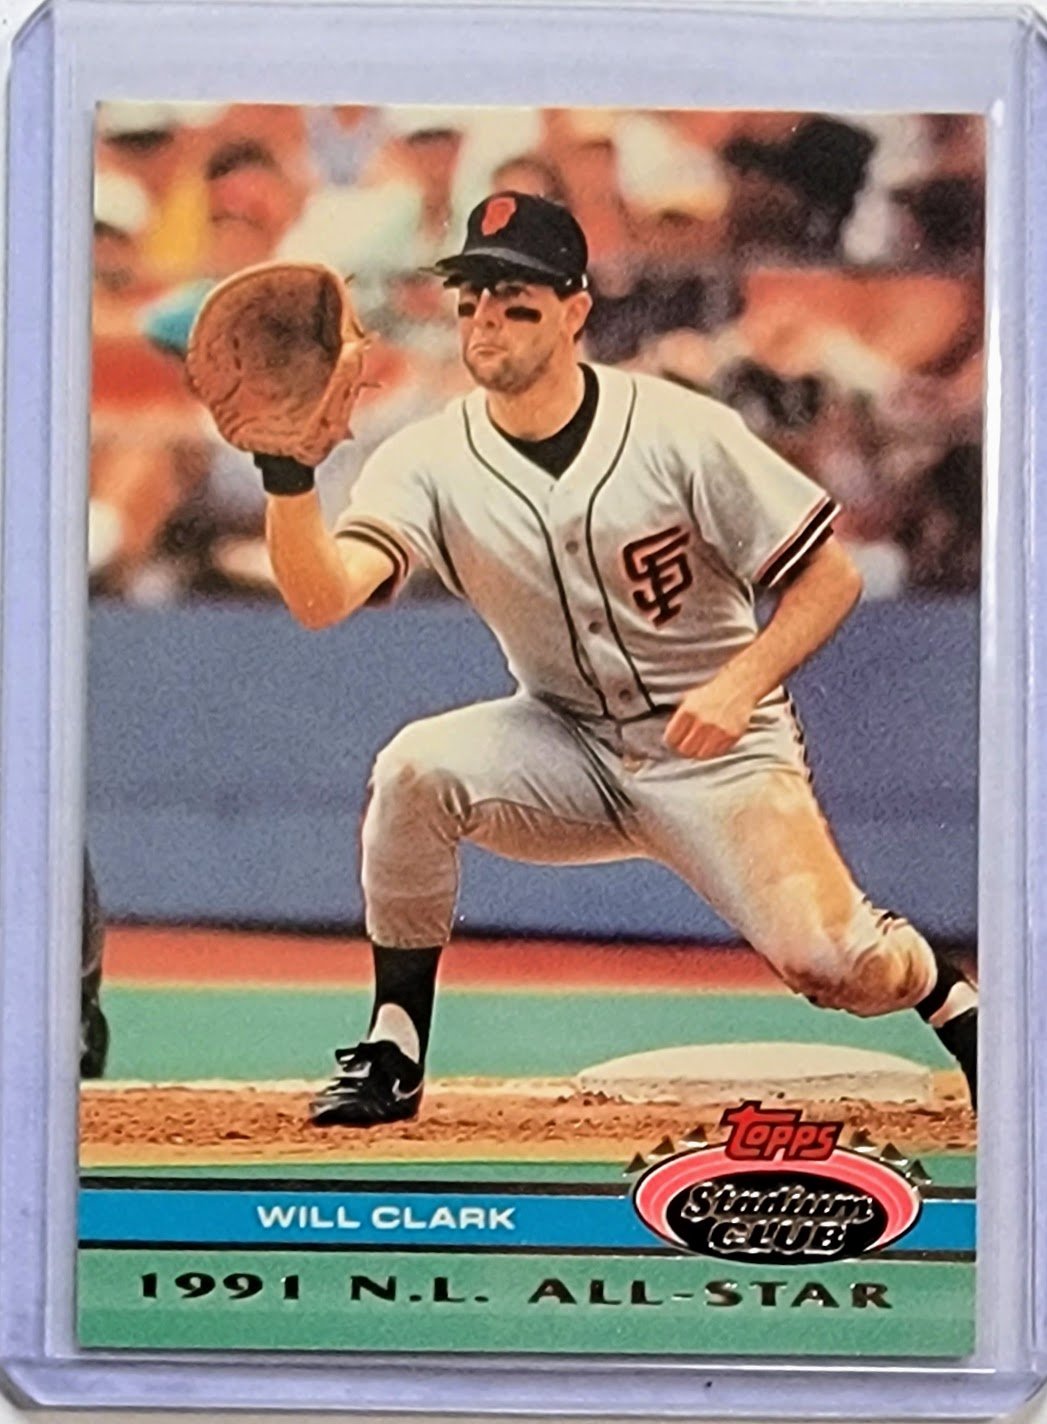 1992 Topps Stadium Club Dome Will Clark 1991 All Star MLB Baseball Tra